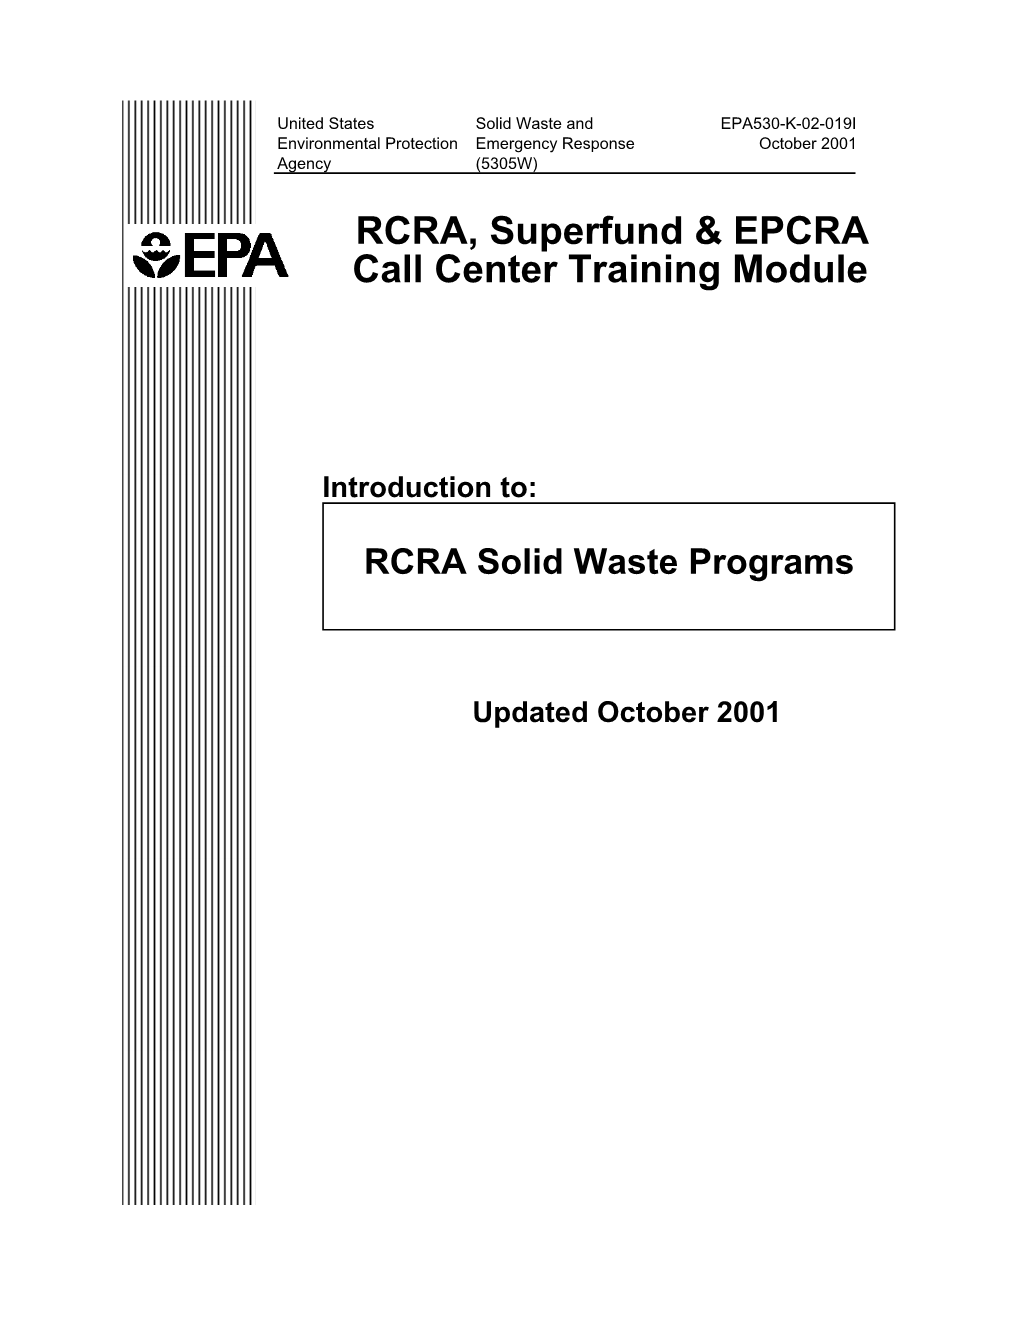 RCRA, Superfund & EPCRA Call Center Training Module